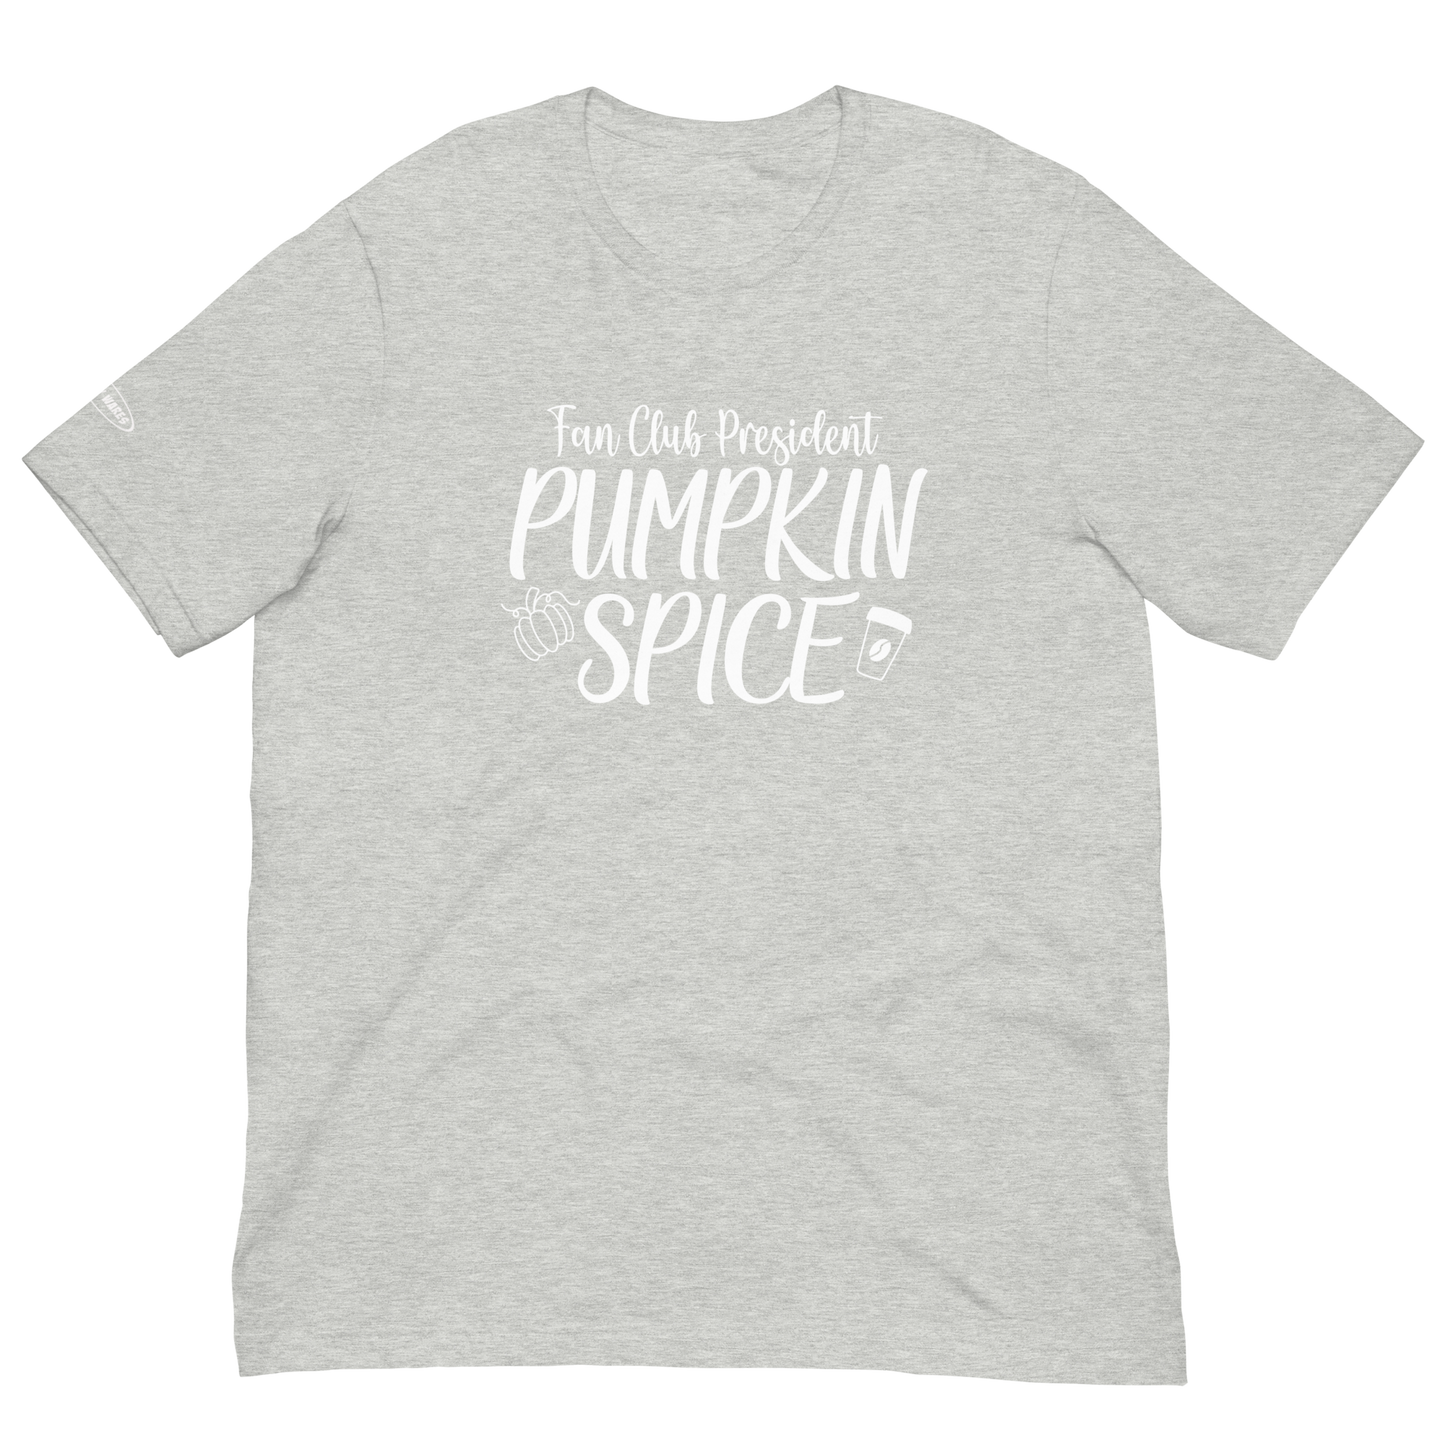 Unisex - Fall Fan Club President Pumpkin Spice - Funny T-shirt